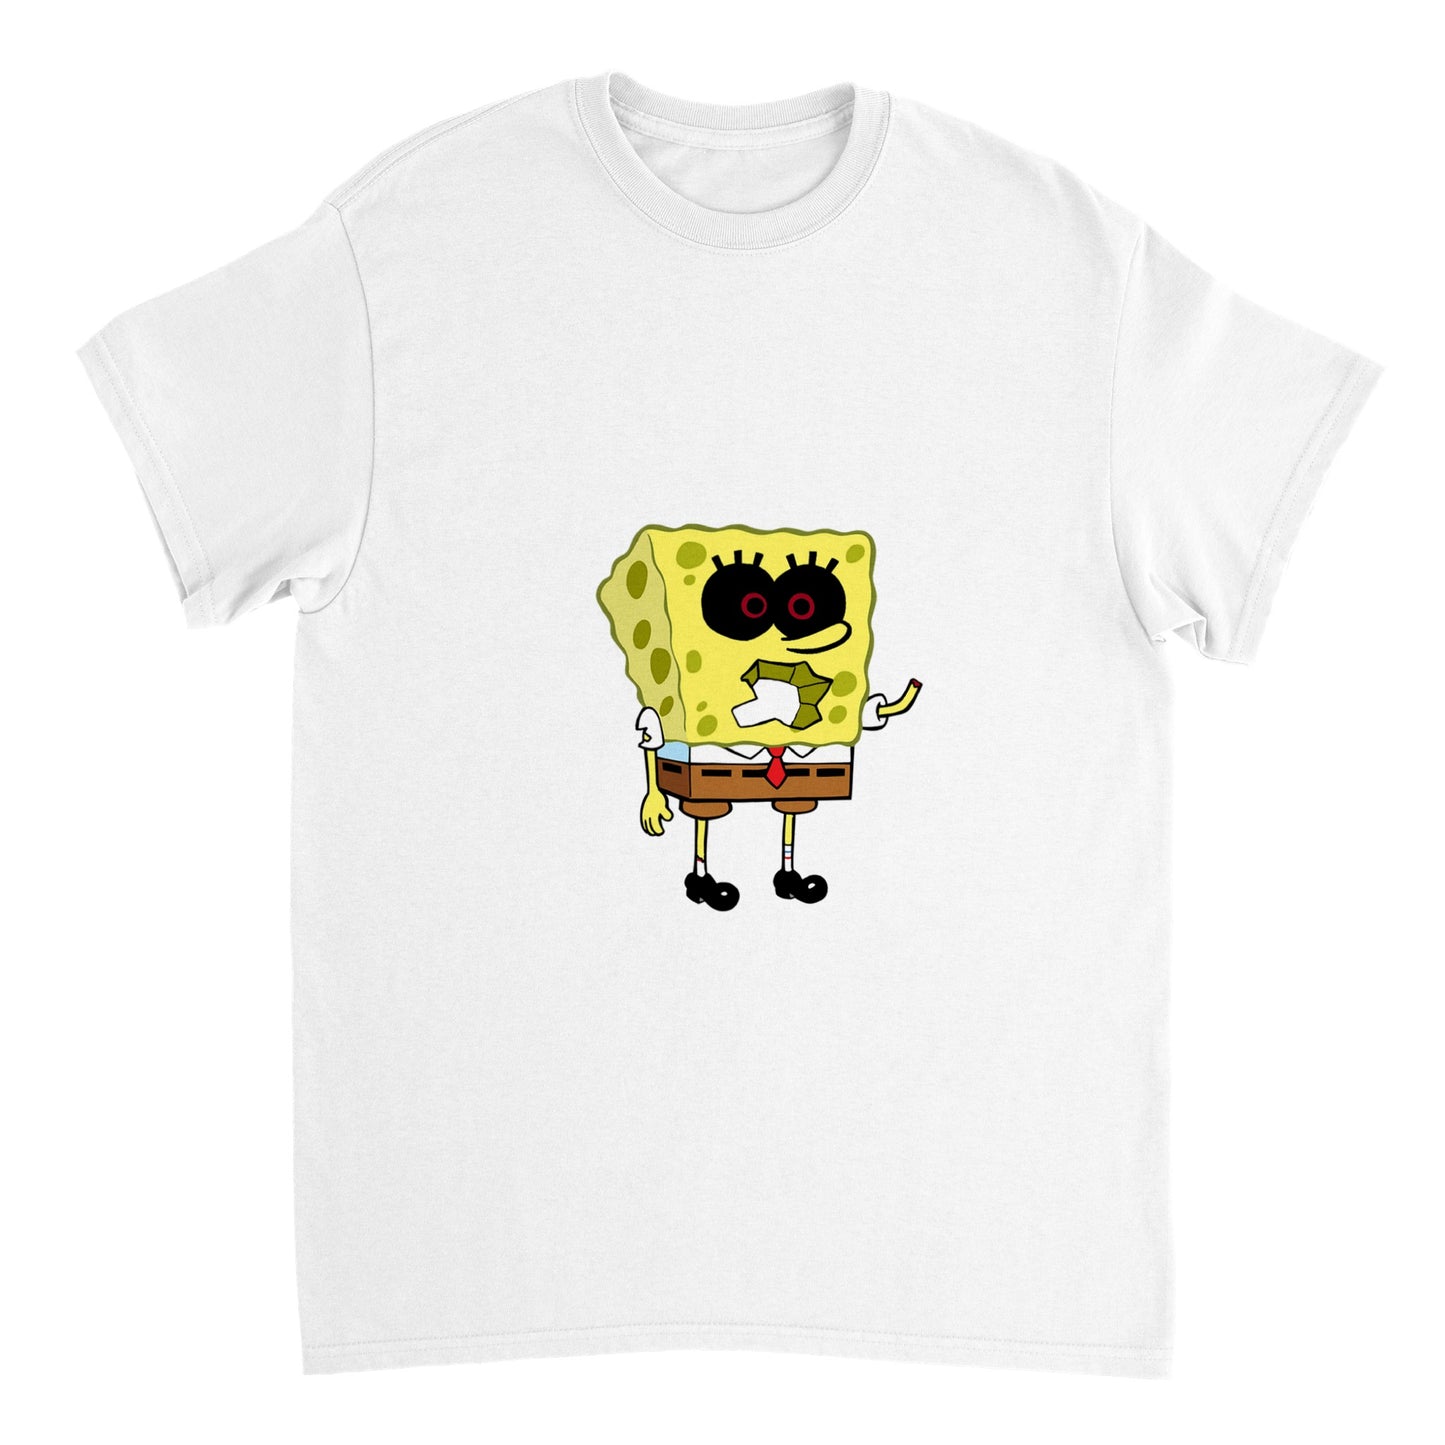 dead spongebob shirt